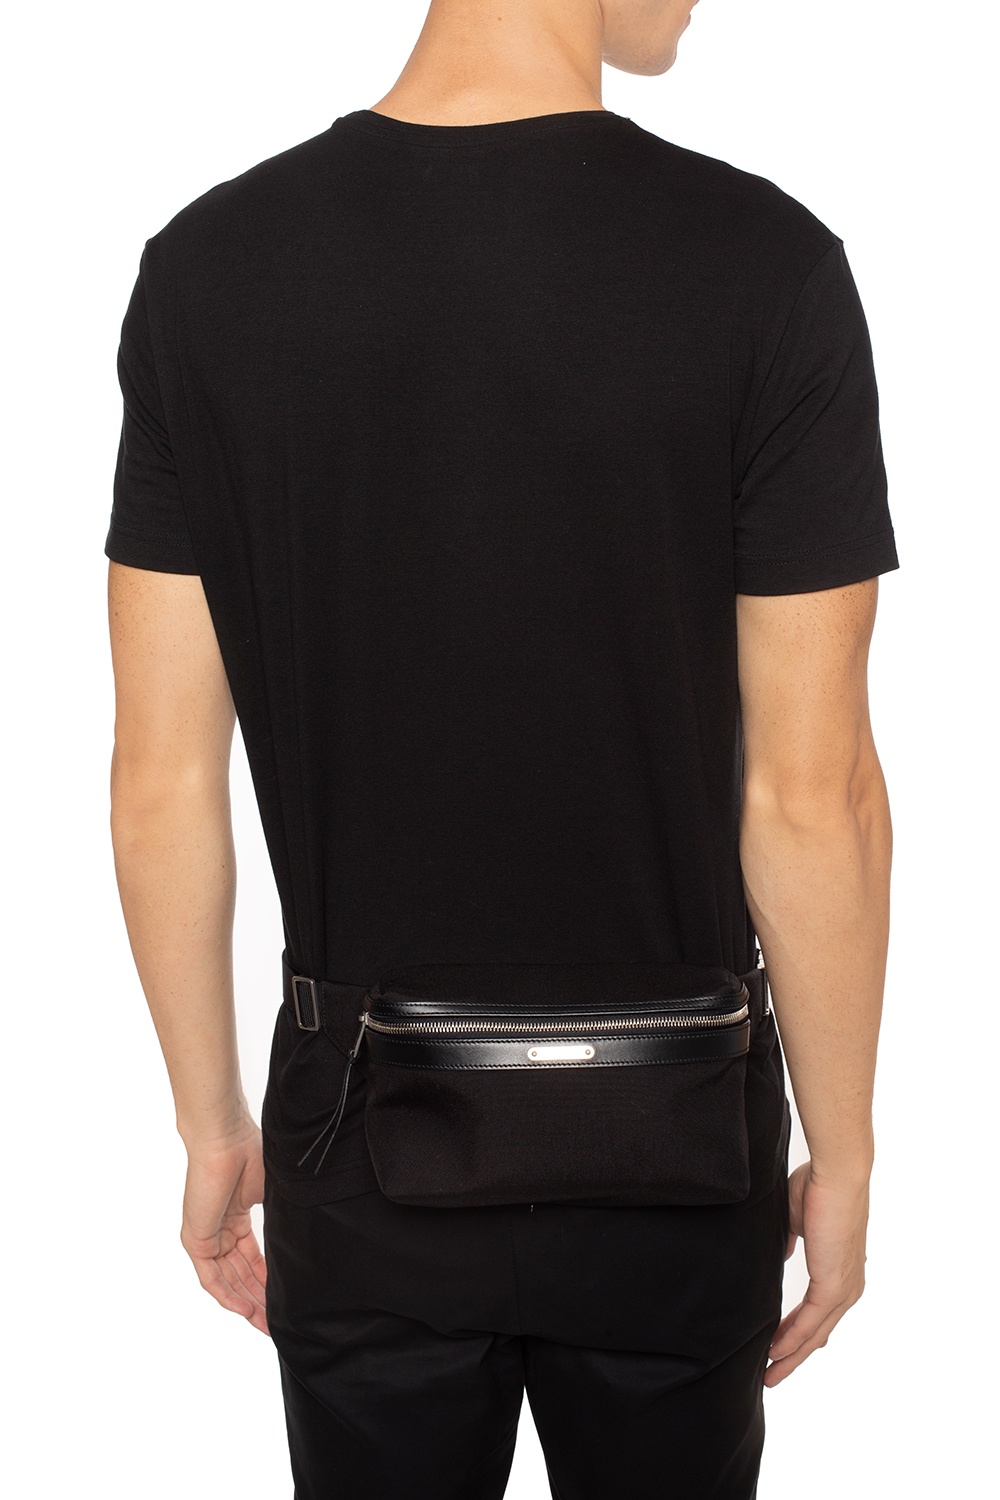 Yves Saint Laurent Leather Waist Bags & Fanny Packs